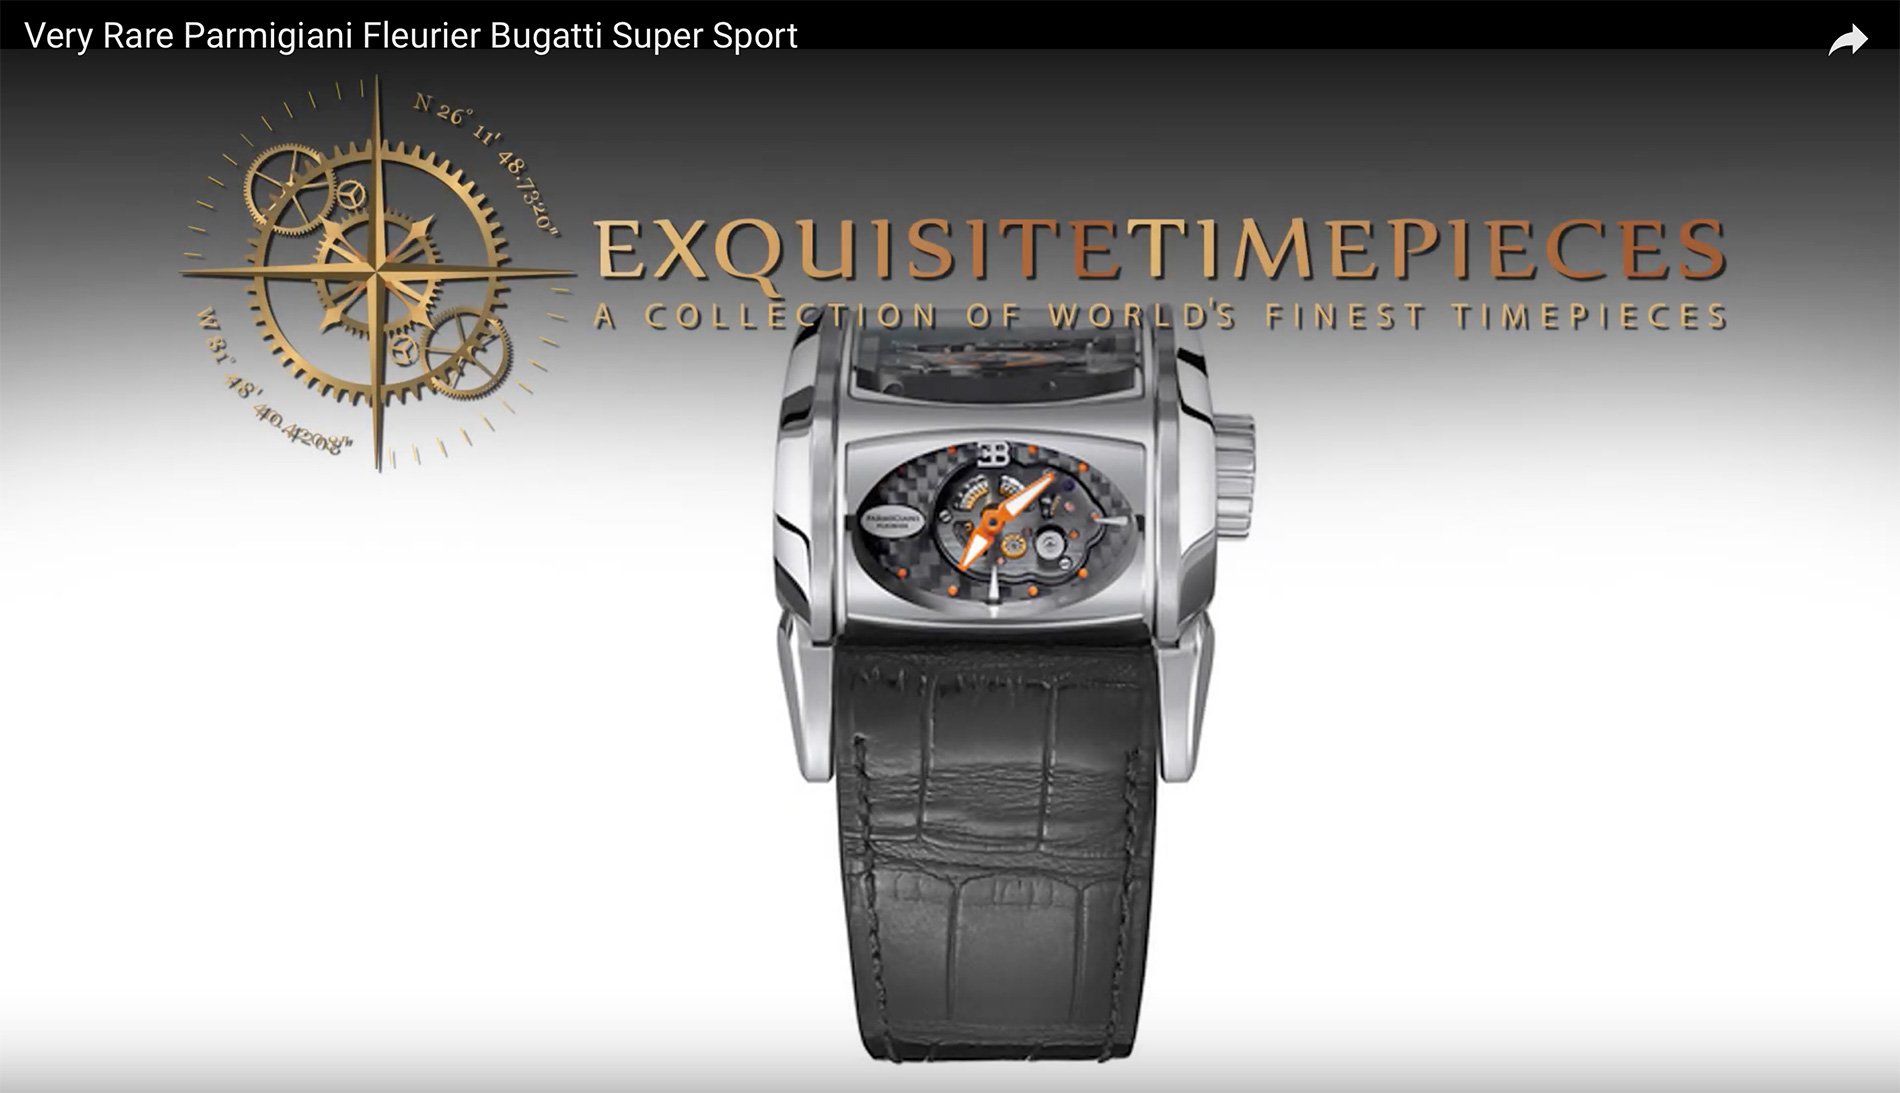 Very Rare Parmigiani Fleurier Bugatti Super Sport